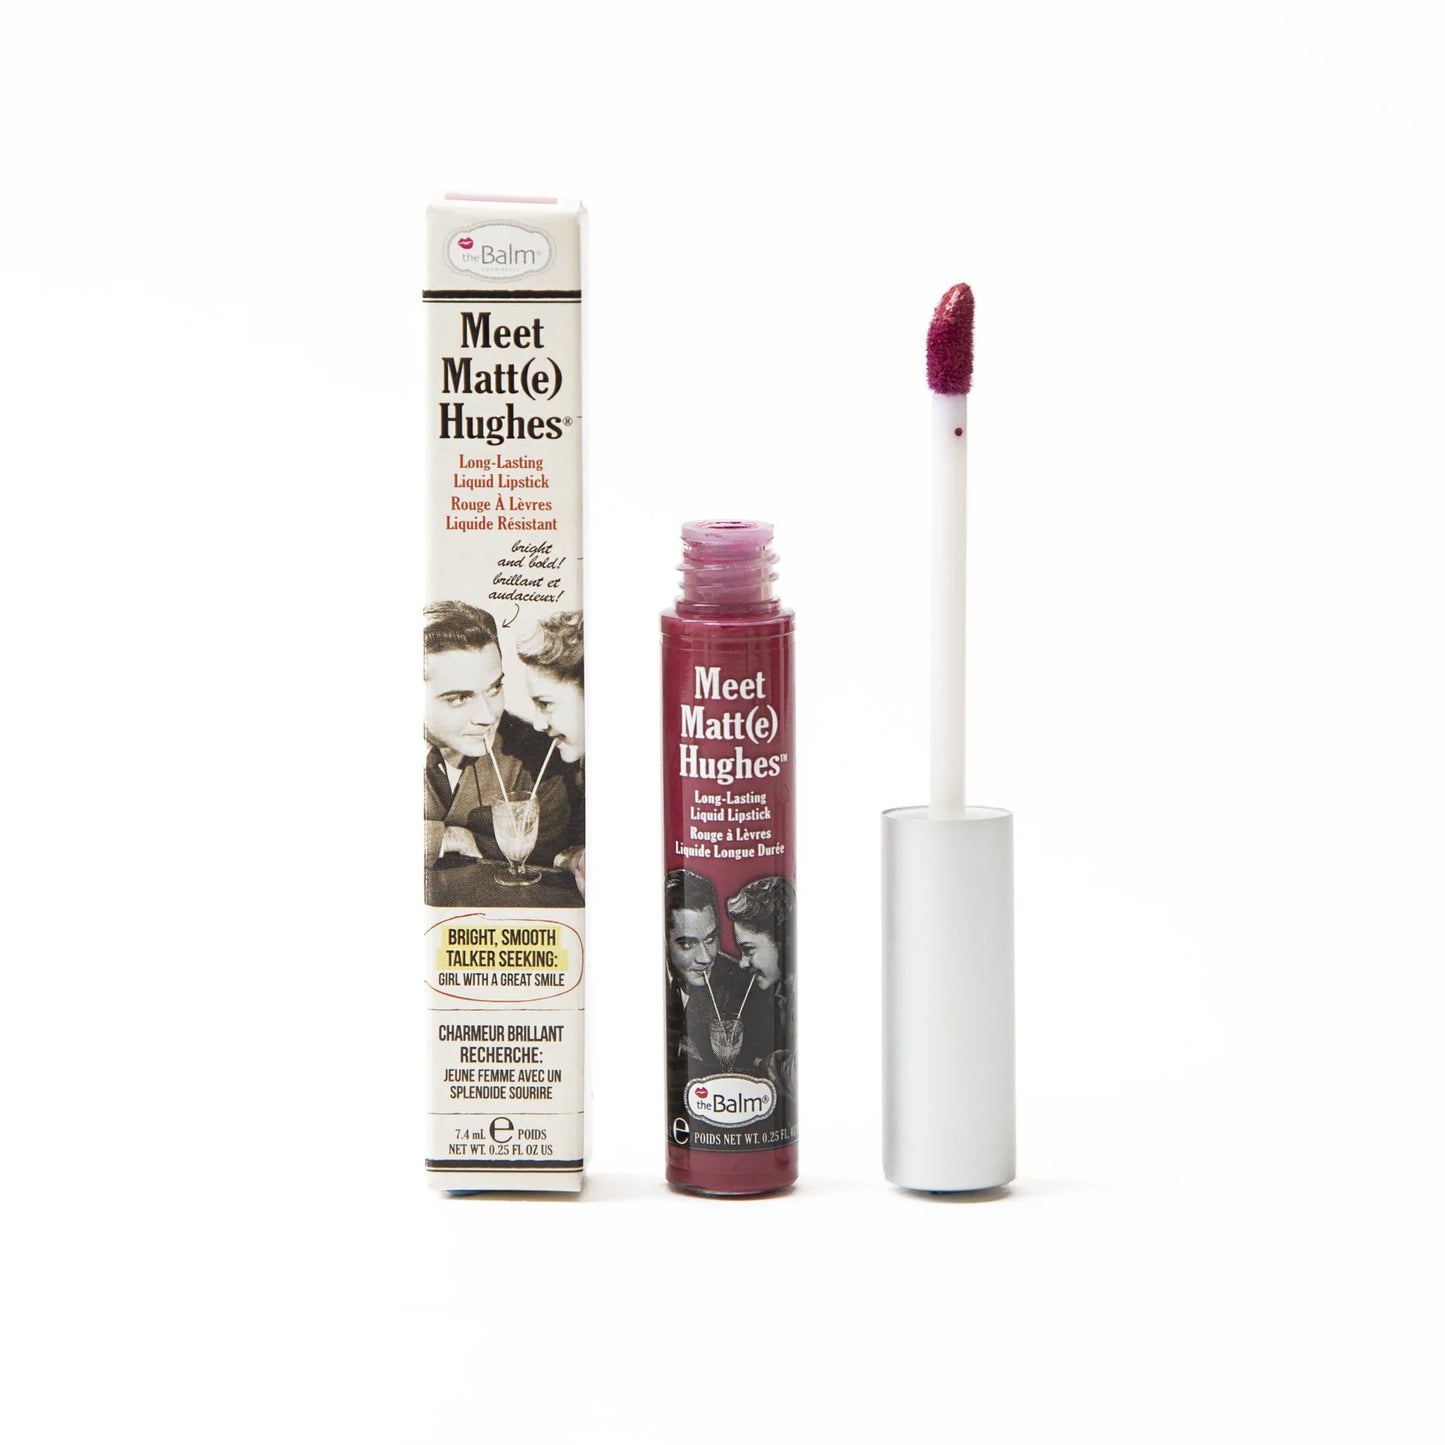 Meet Matte Hughes - Long Lasting Liquid Lipstick